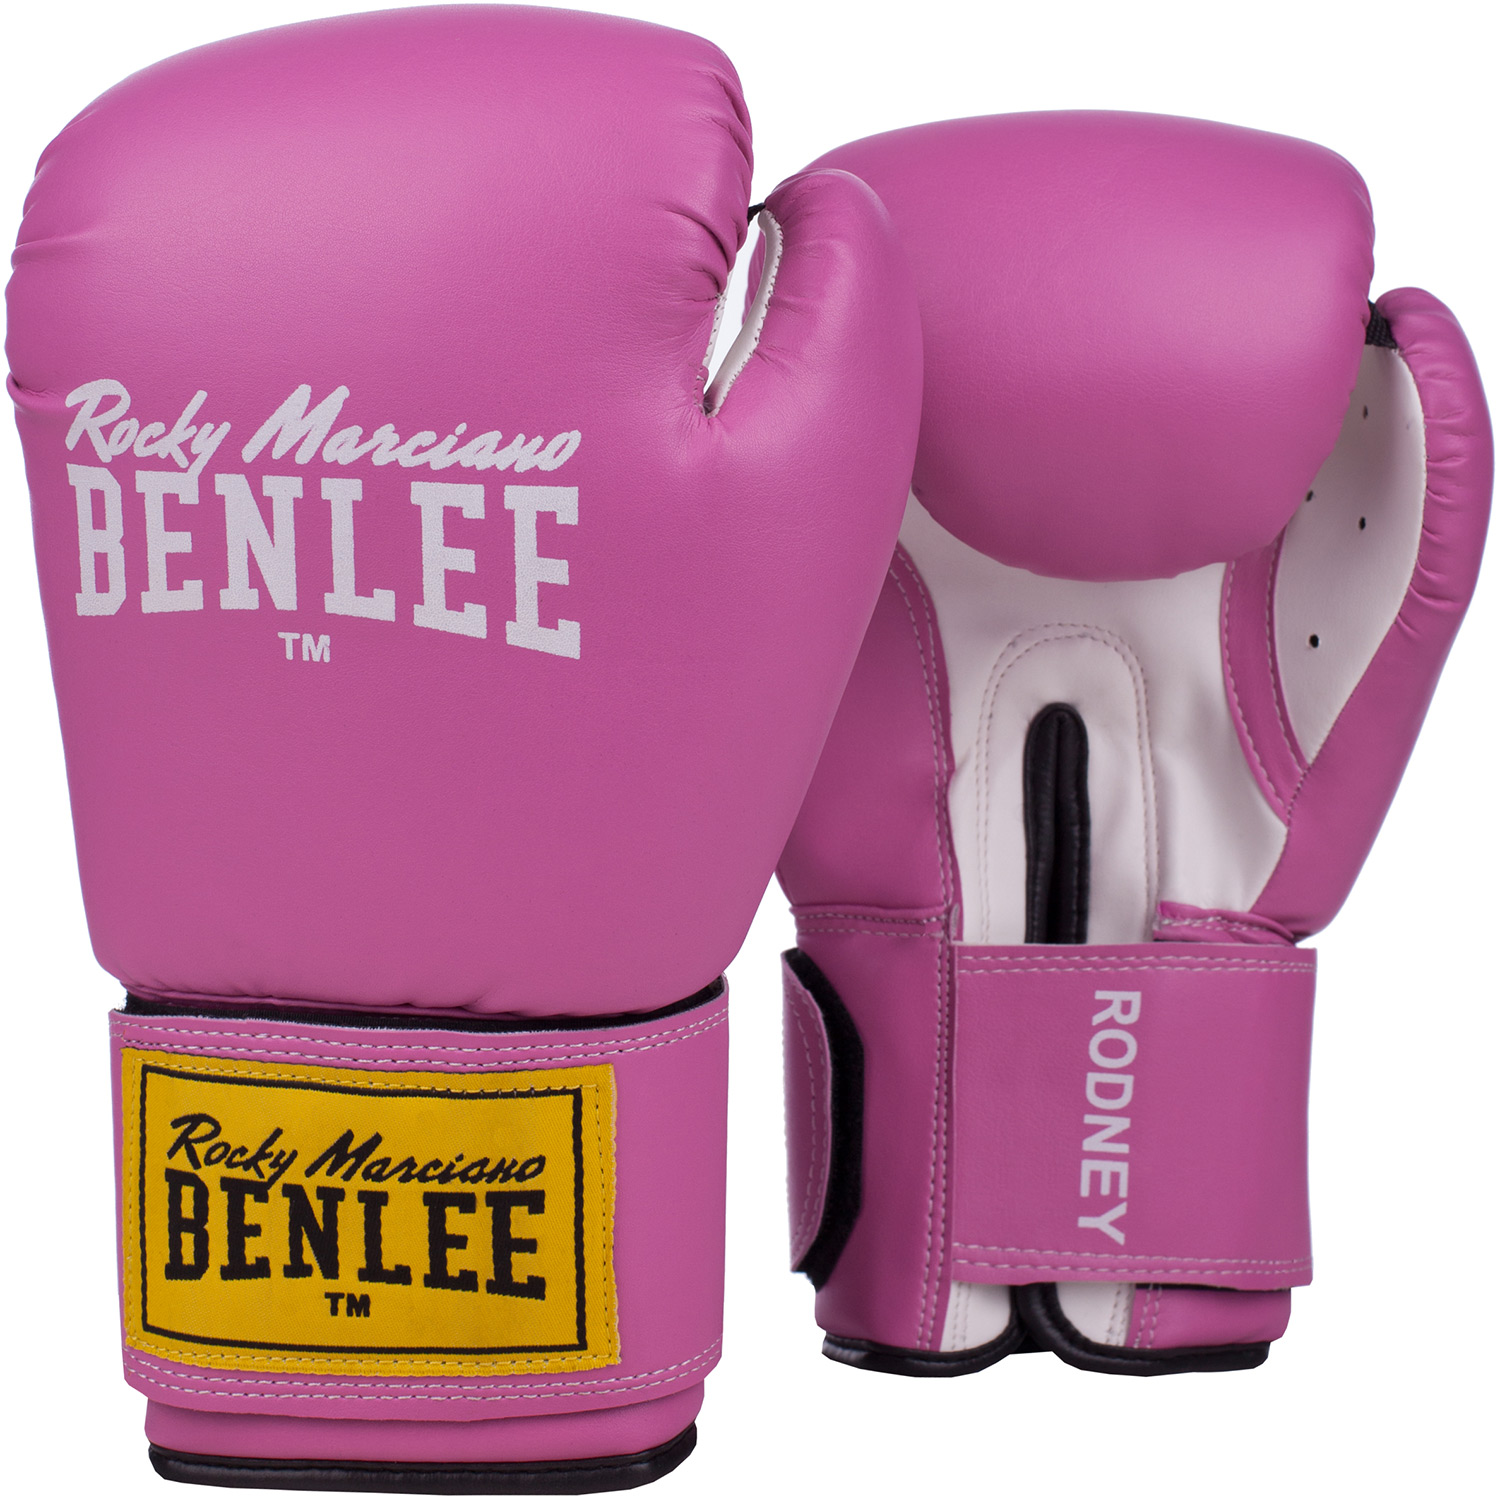 Benlee Rodney boxing gloves 12 oz pink/white